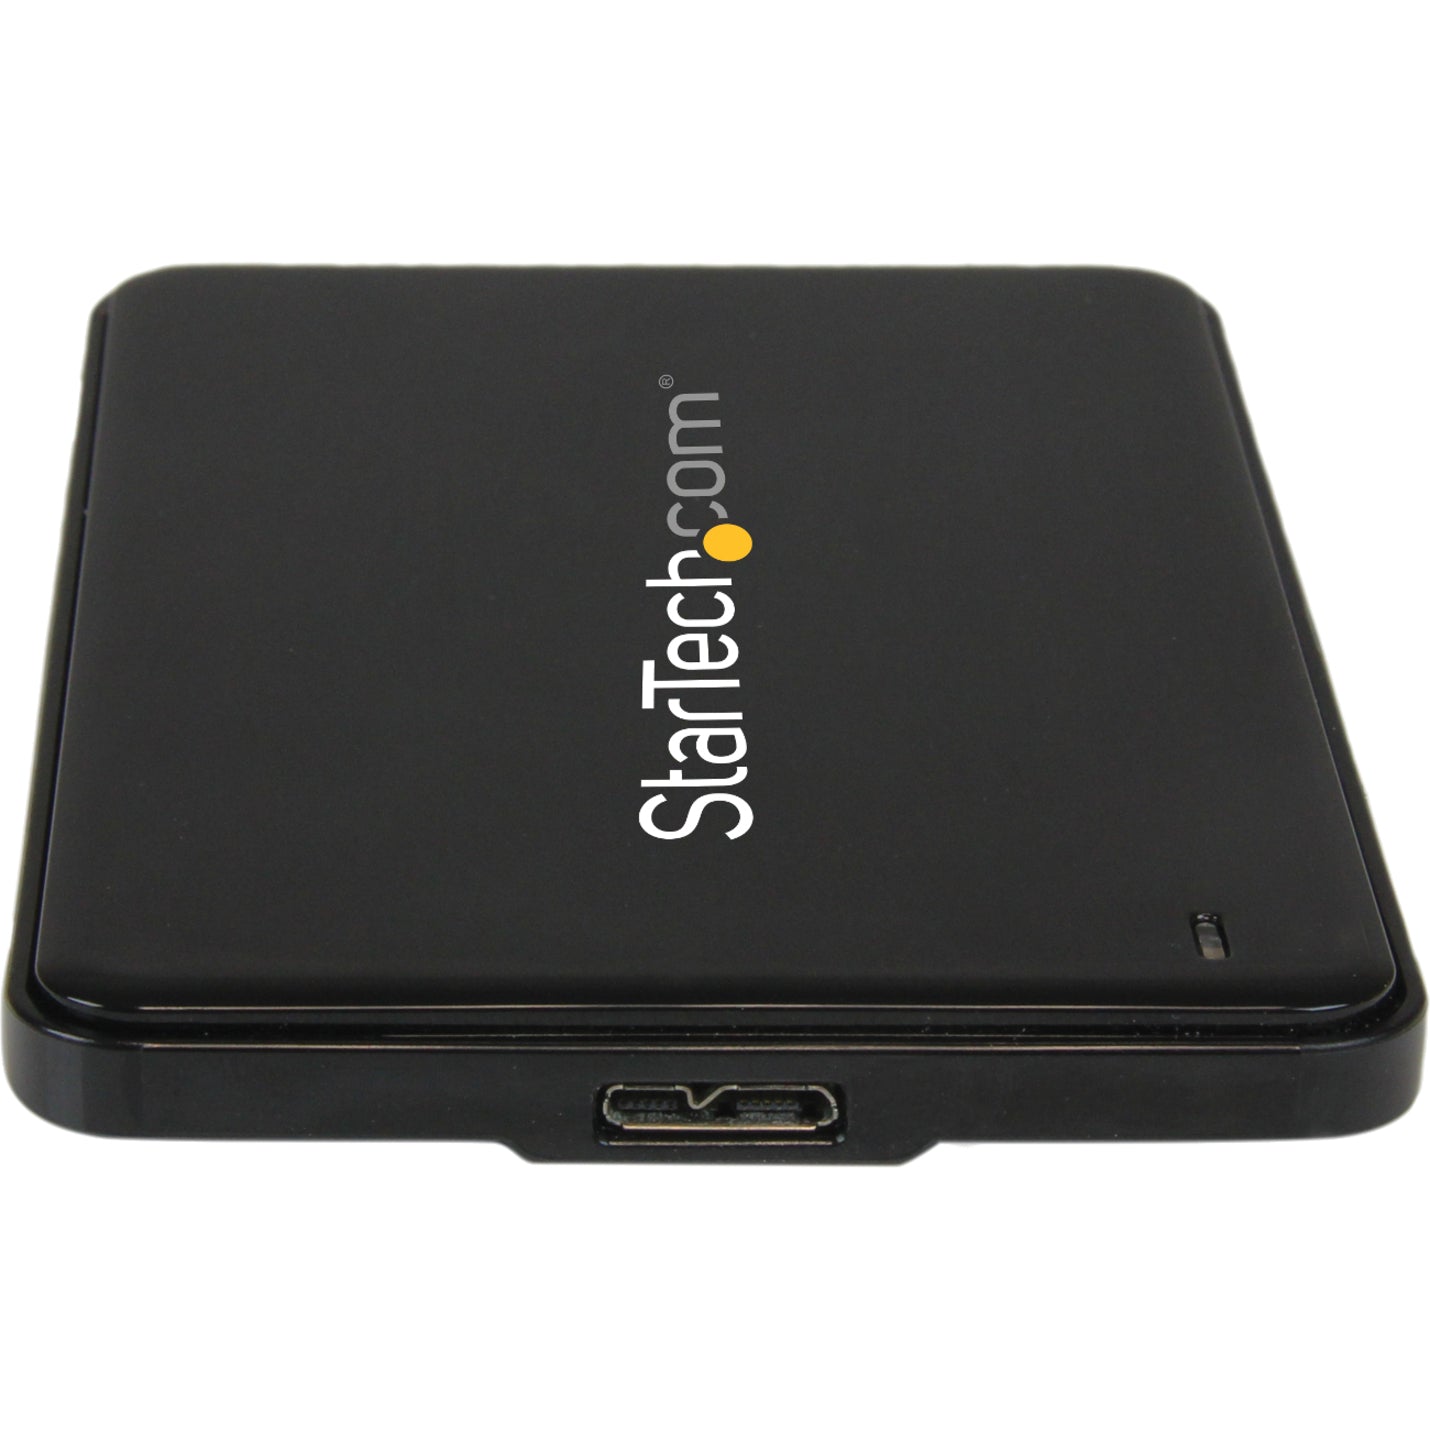 StarTechcom S2510BPU337 25-Zoll-USB-30-SATA-Festplattengehäuse mit UASP schlanker 7-mm-SATA-III-SSD/HDD schneller Datentransfer